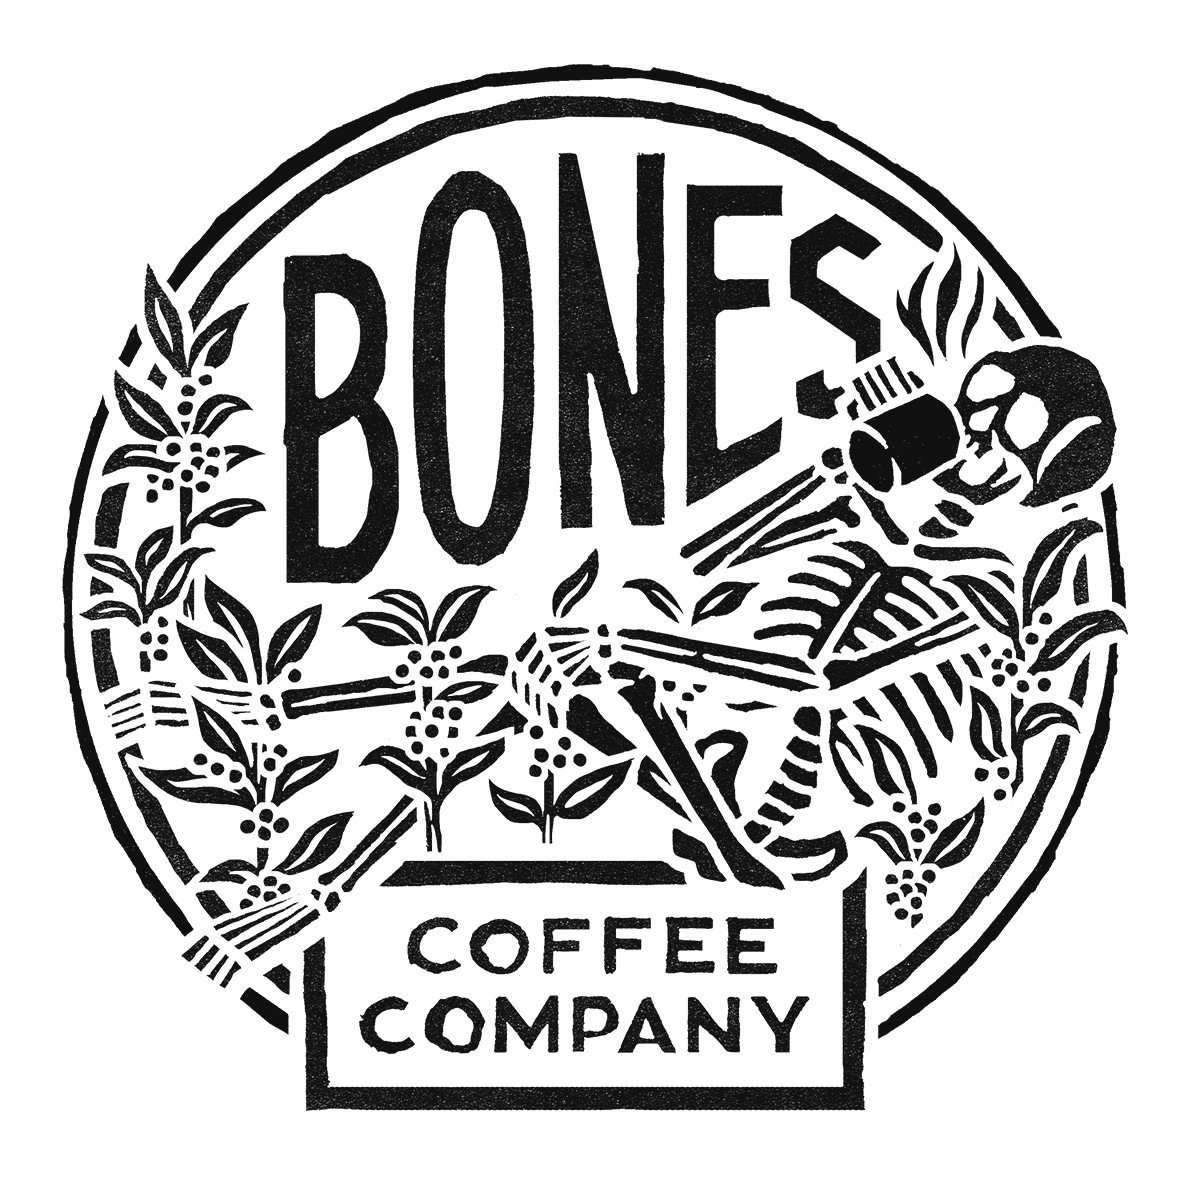 Bones - Companies 